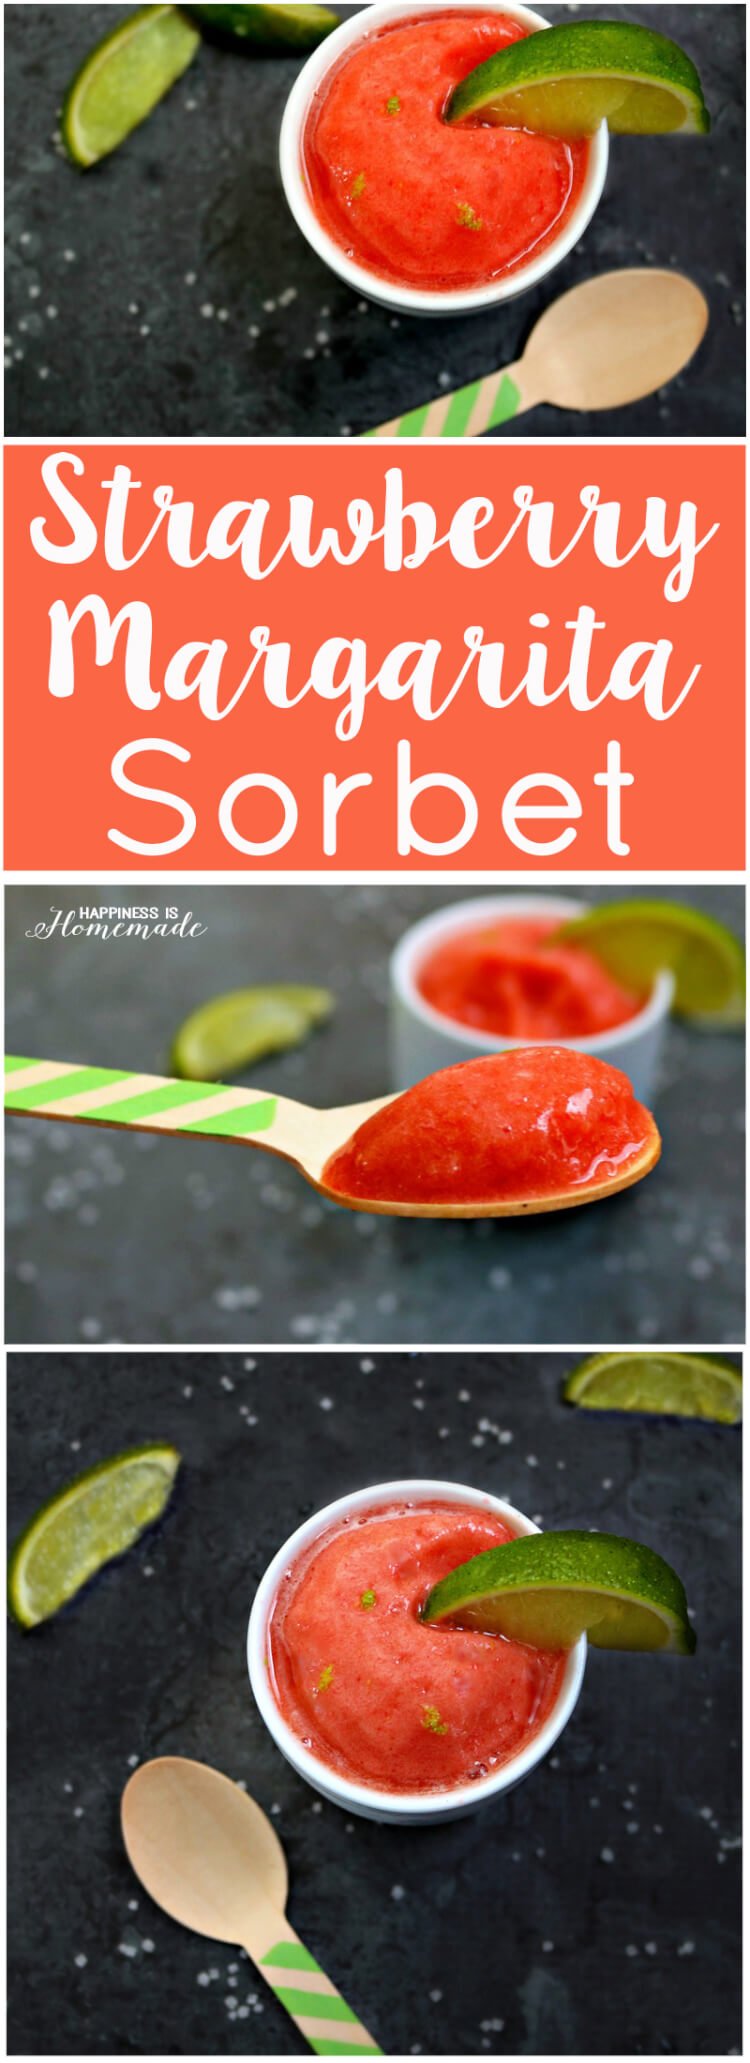 Strawberry Margarita Sorbet Recipe for Summer - Boozy or Not